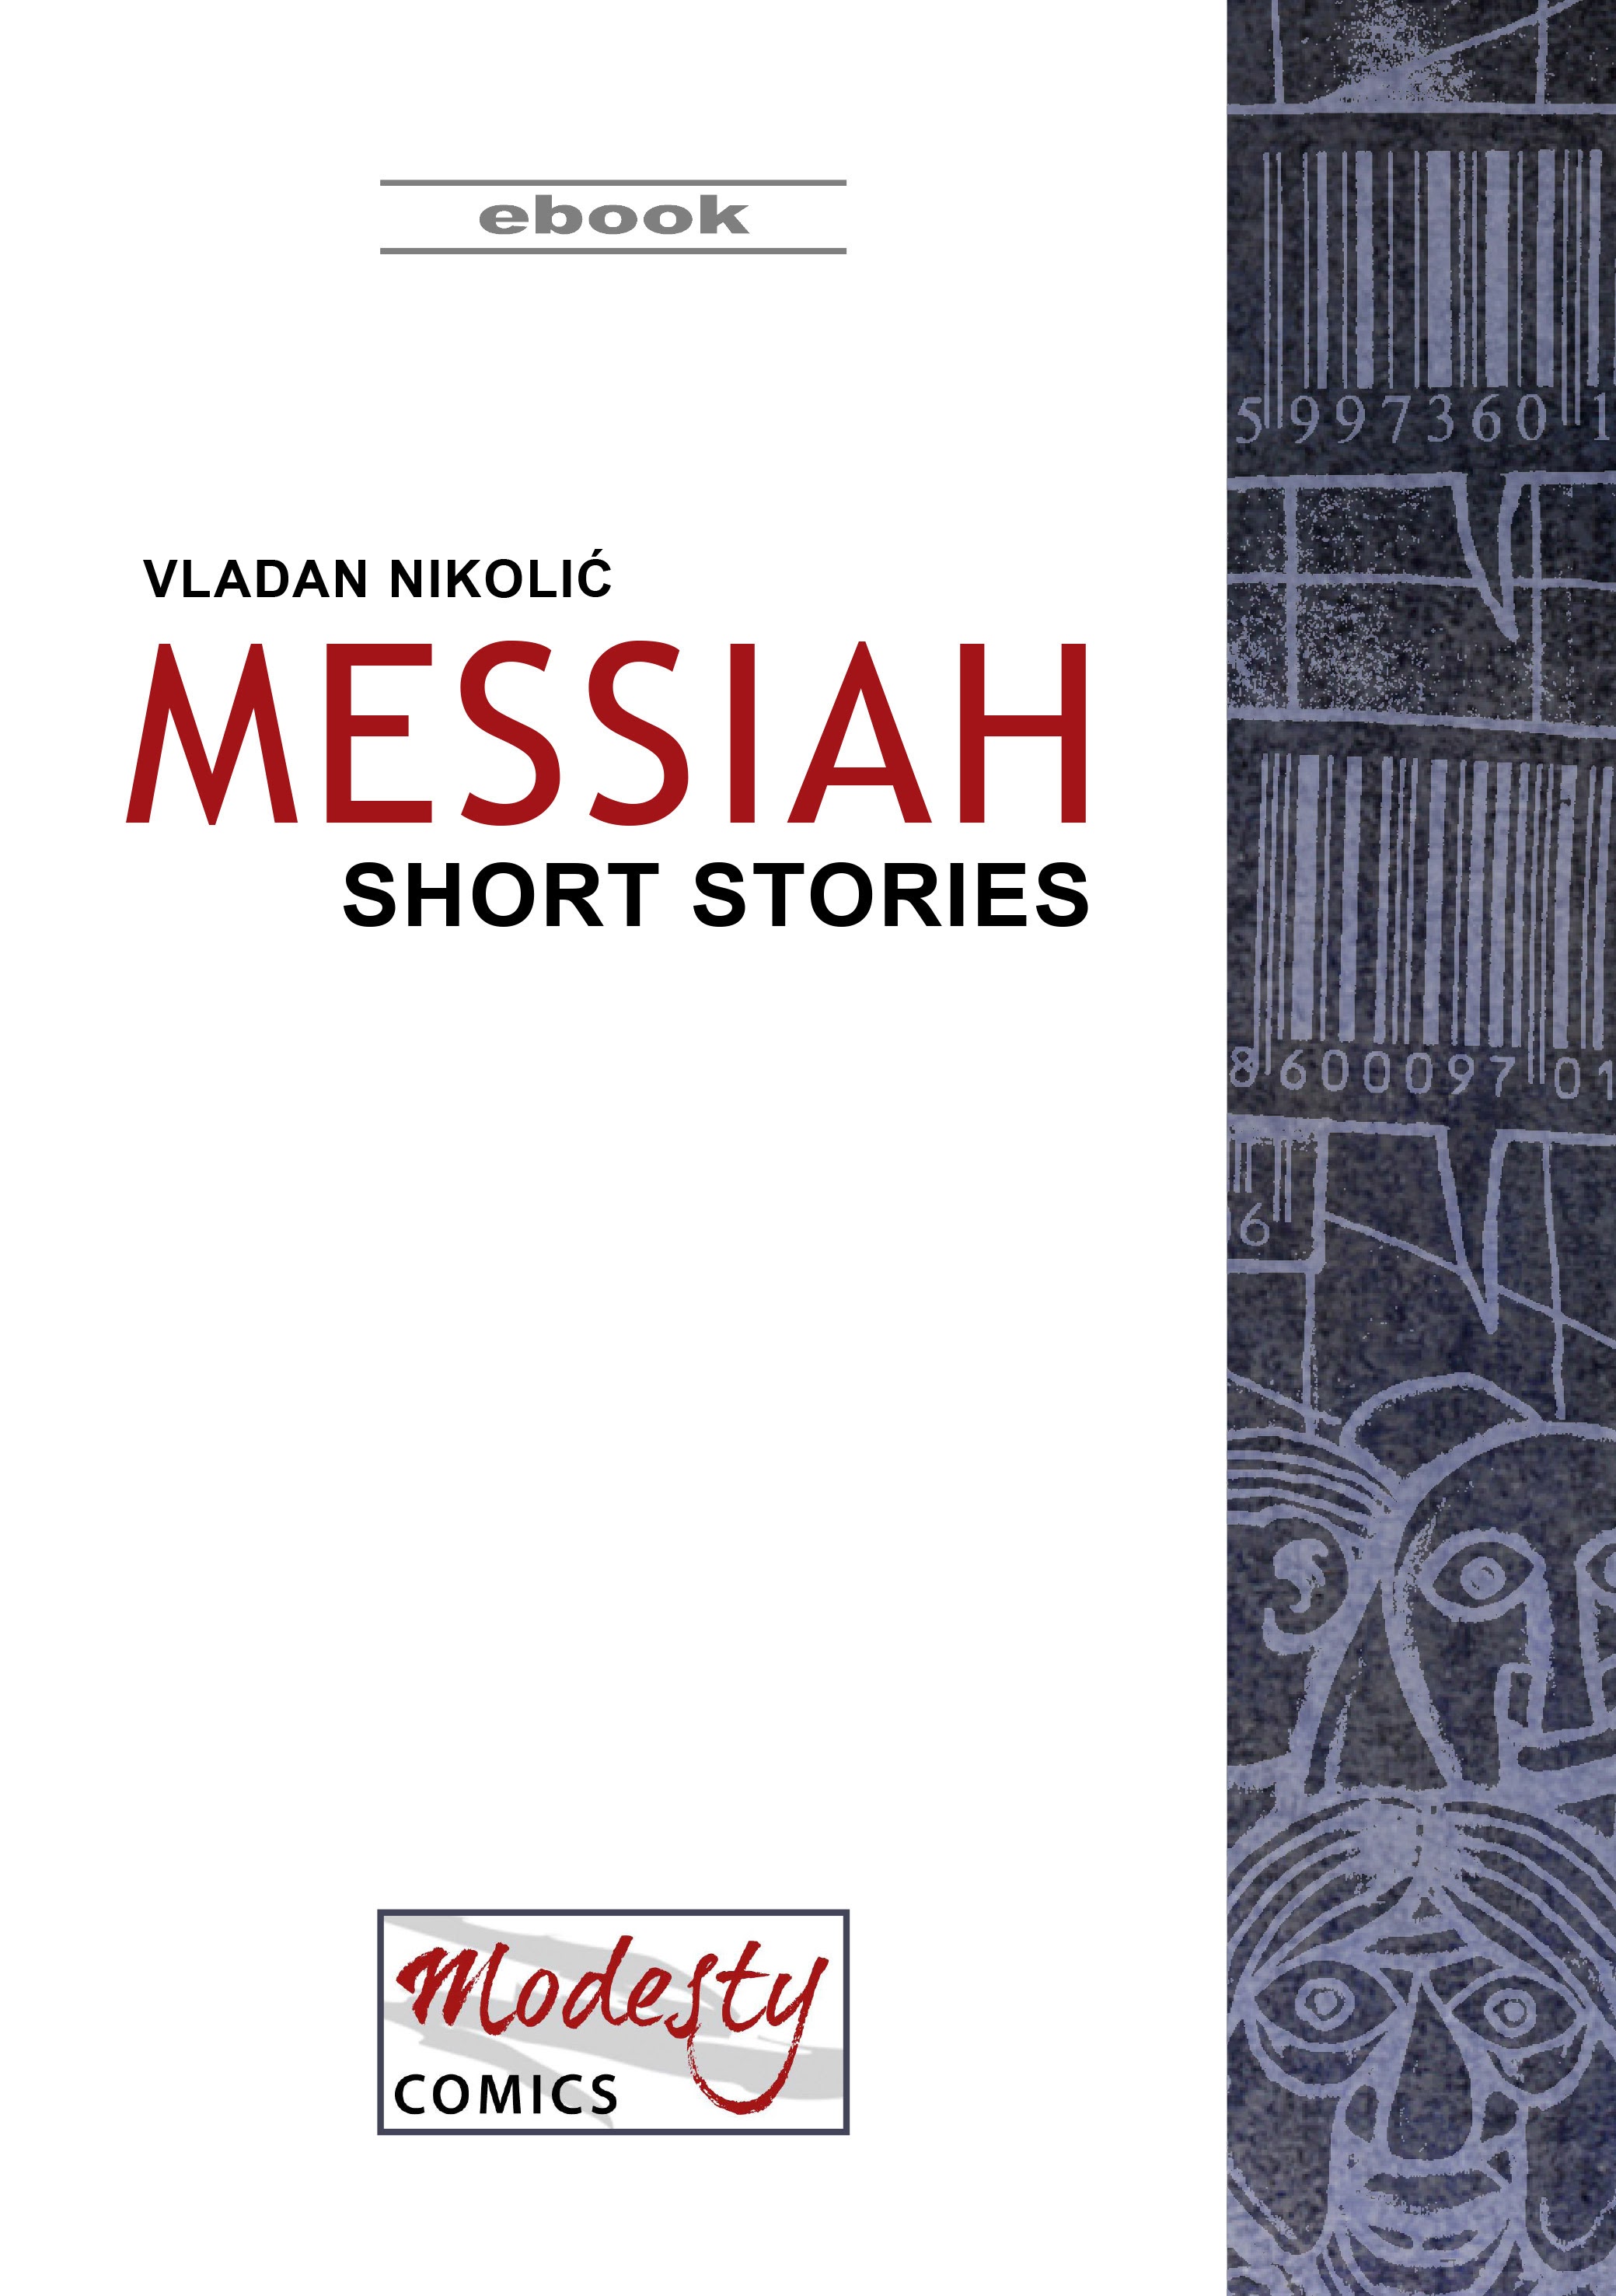 Read online Messiah comic -  Issue # TPB - 4